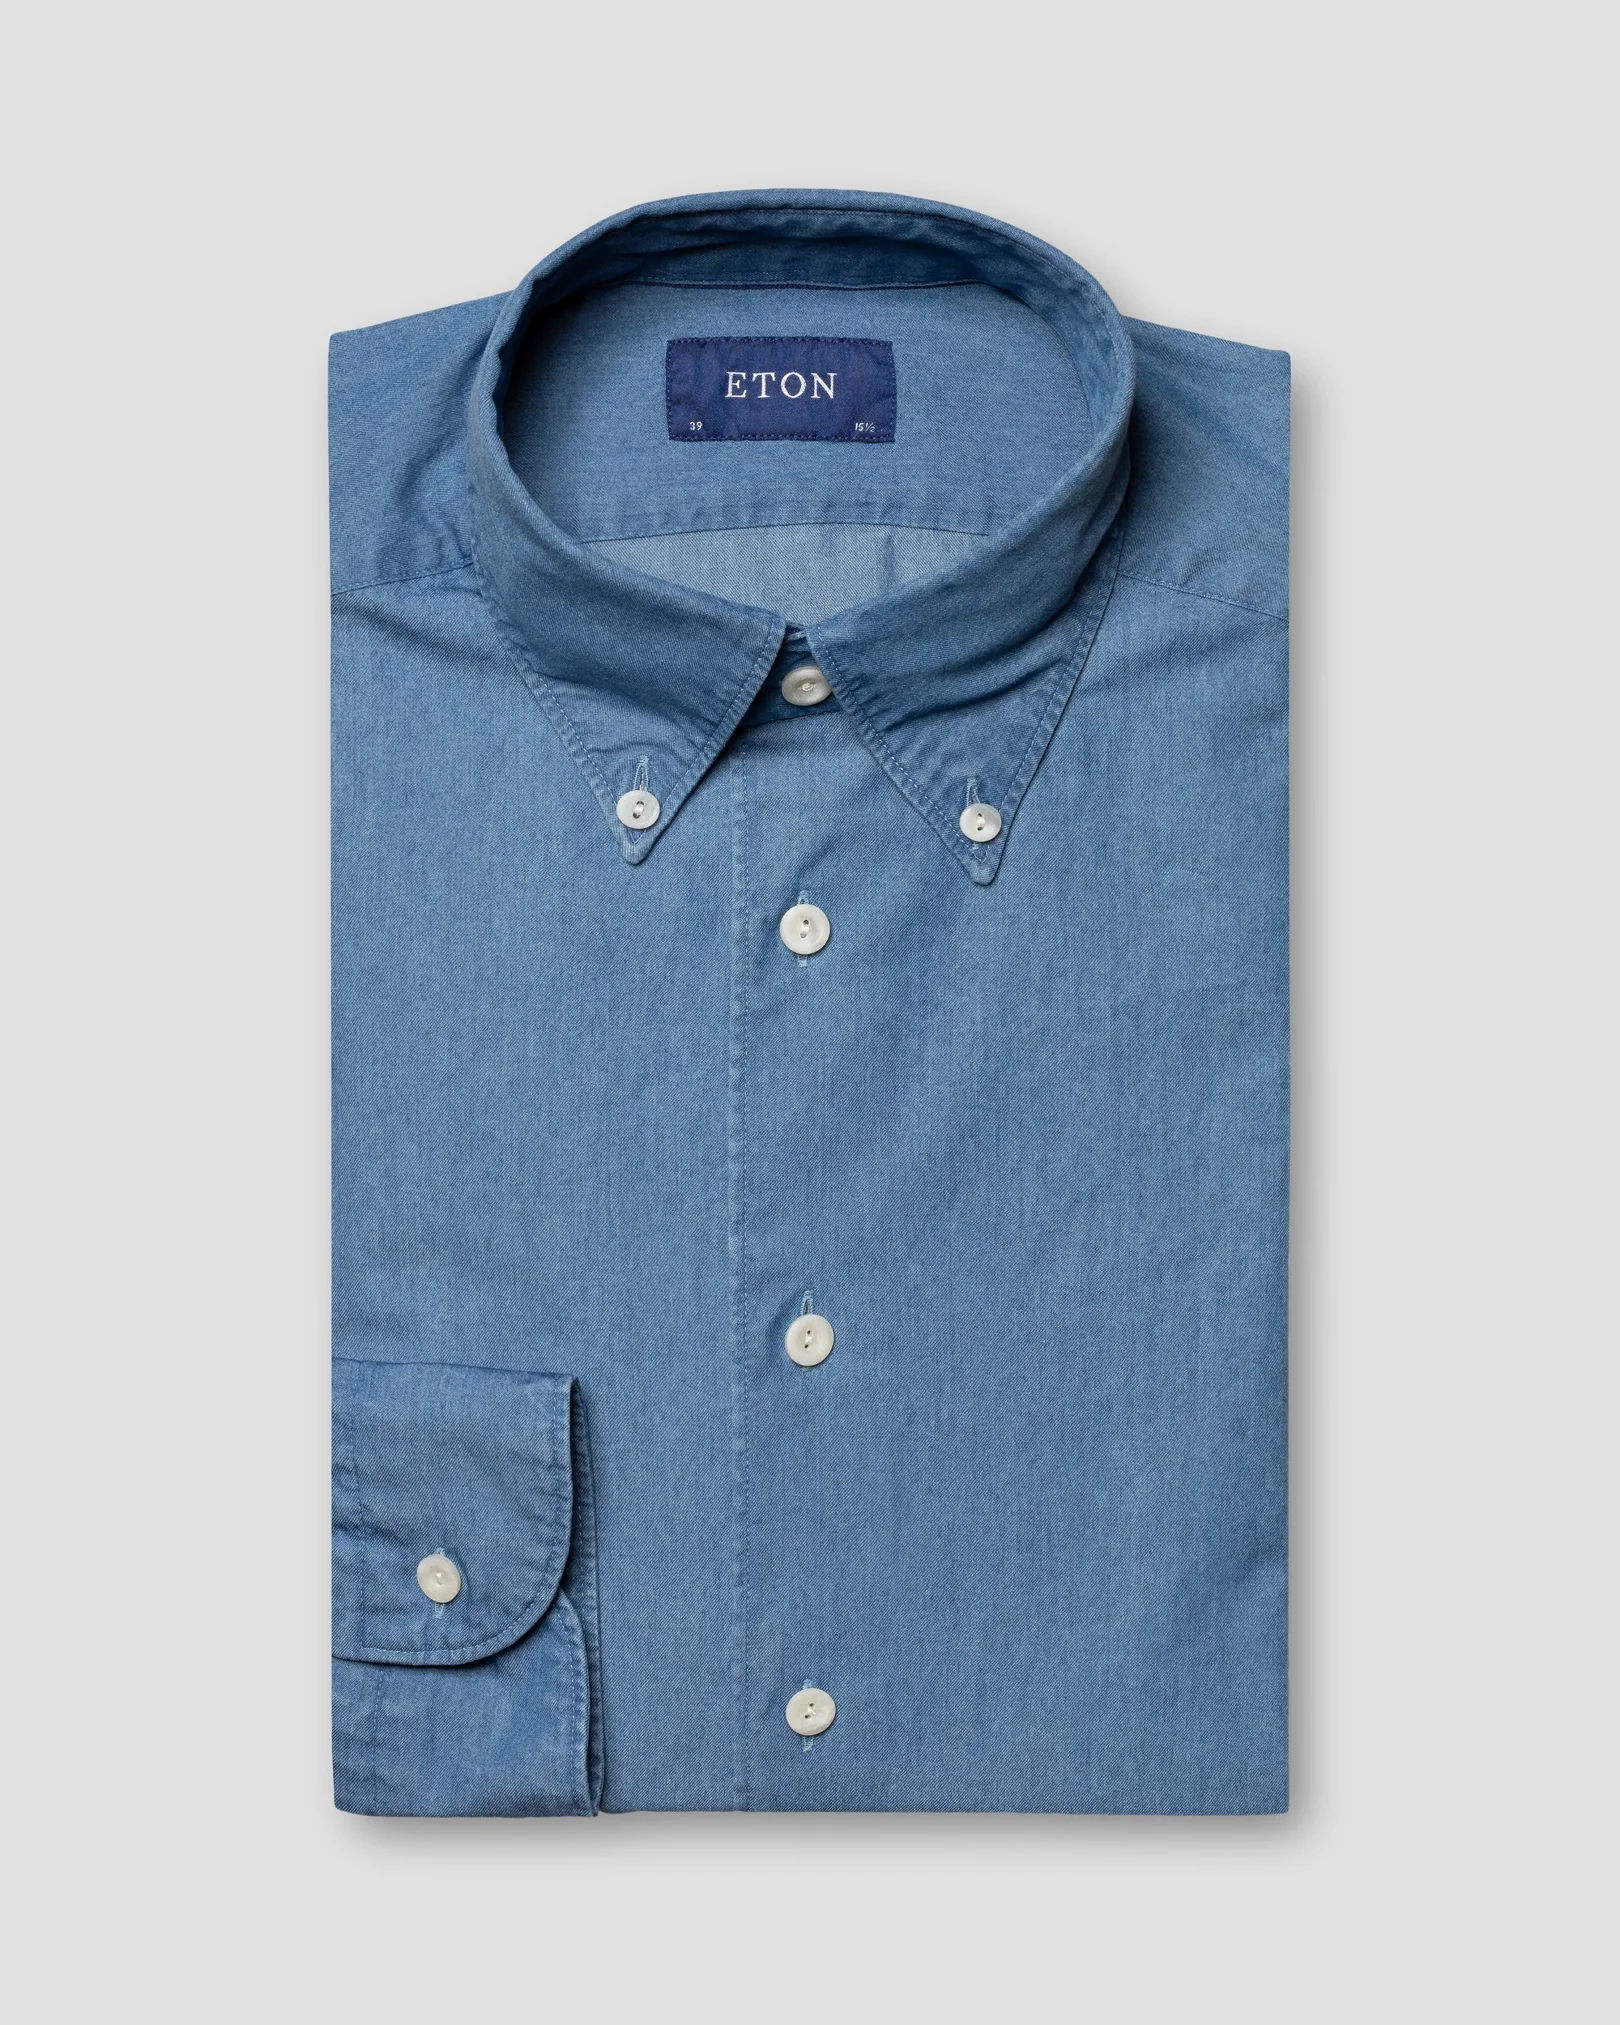 Chemise bleu moyen en denim léger – Boutonnée